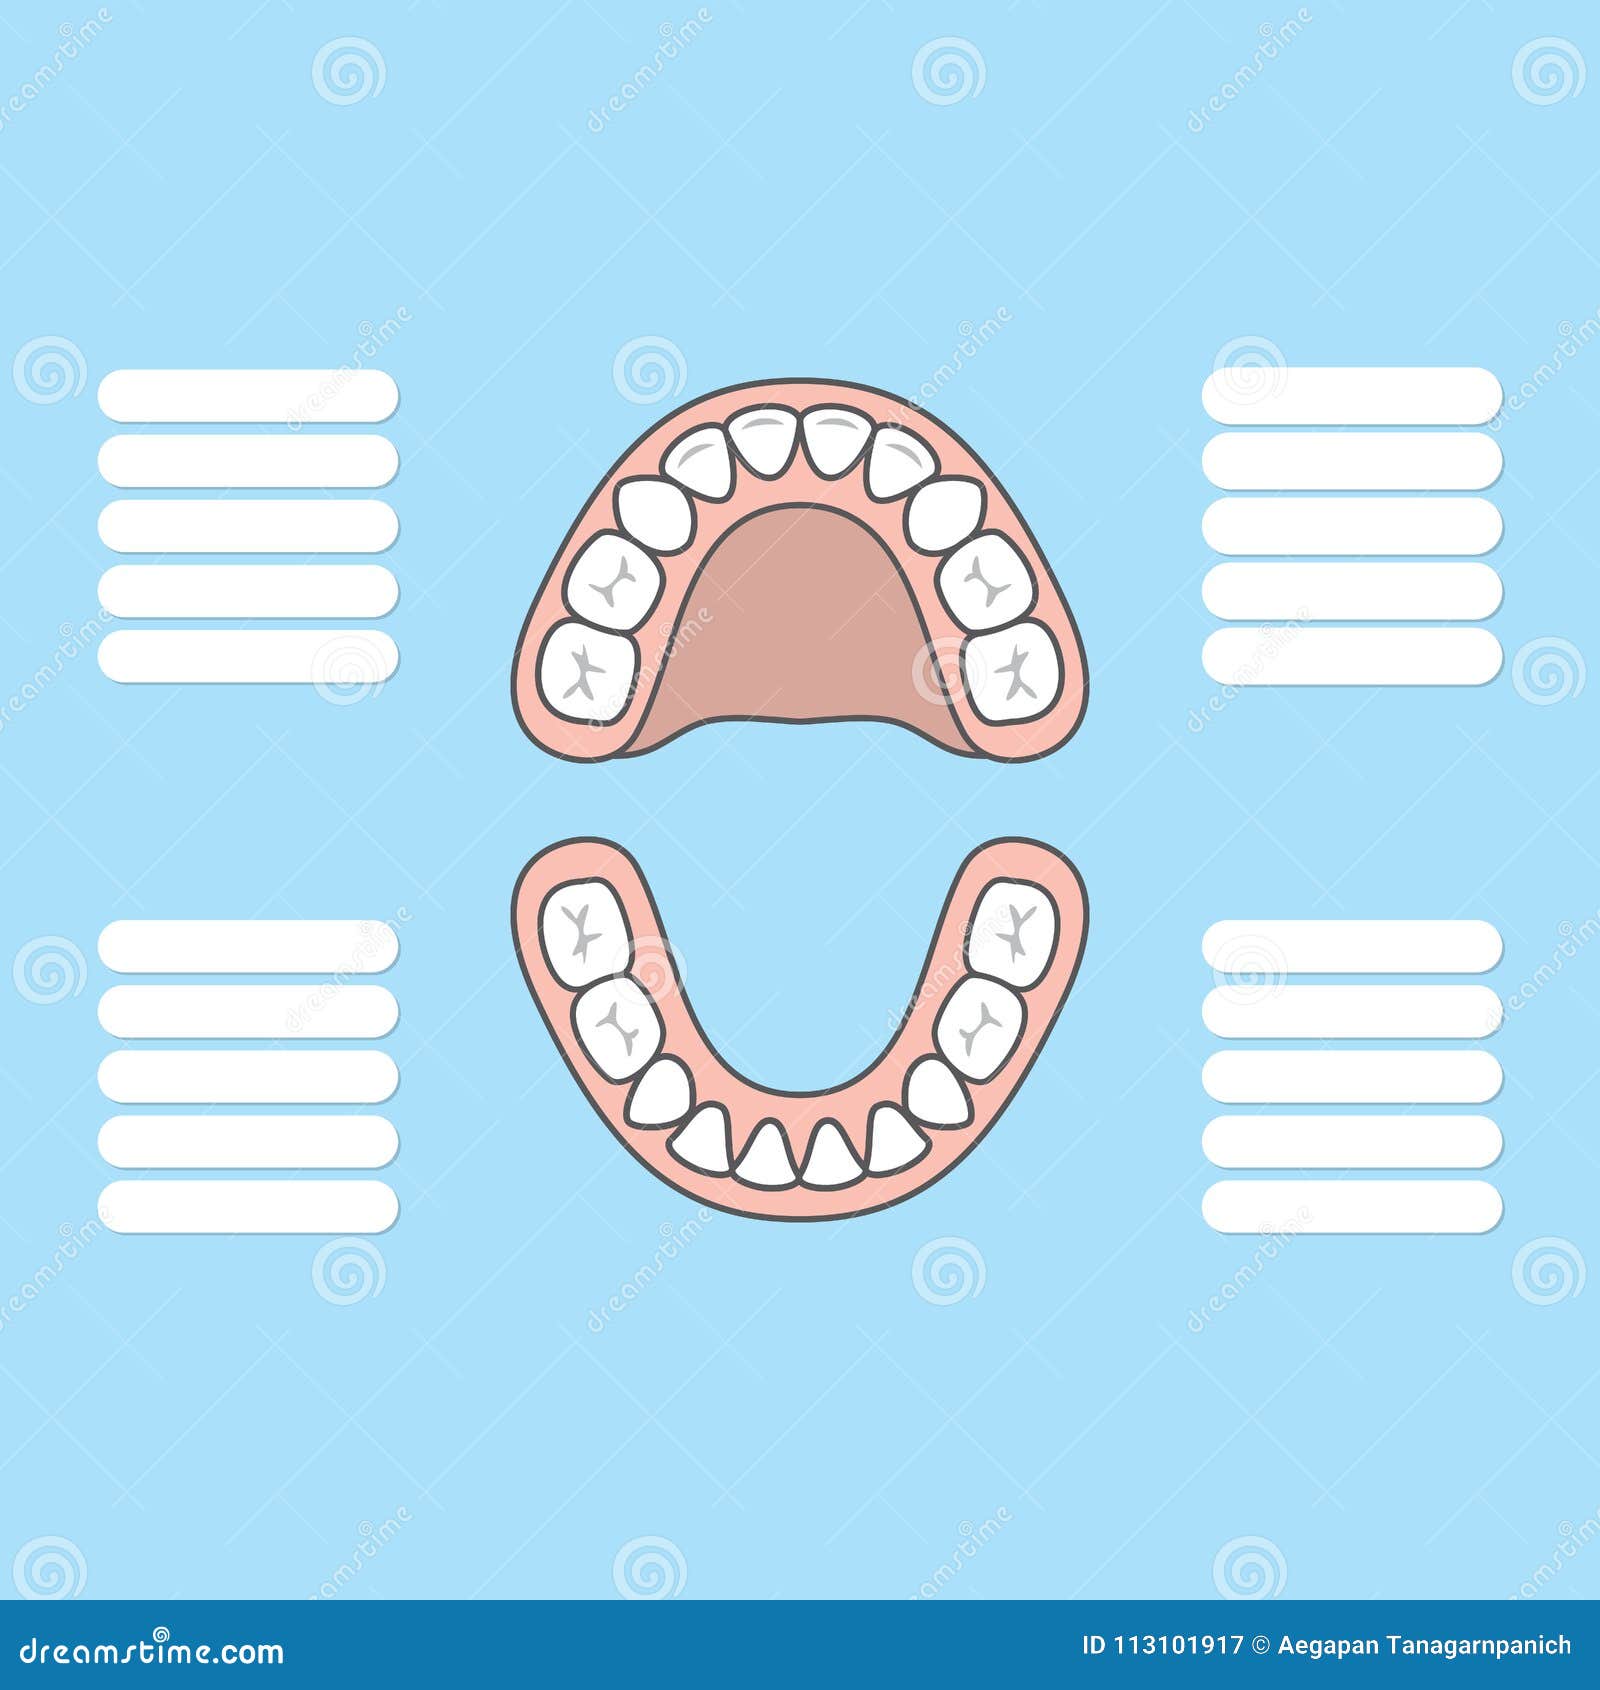 Canine Teeth Chart